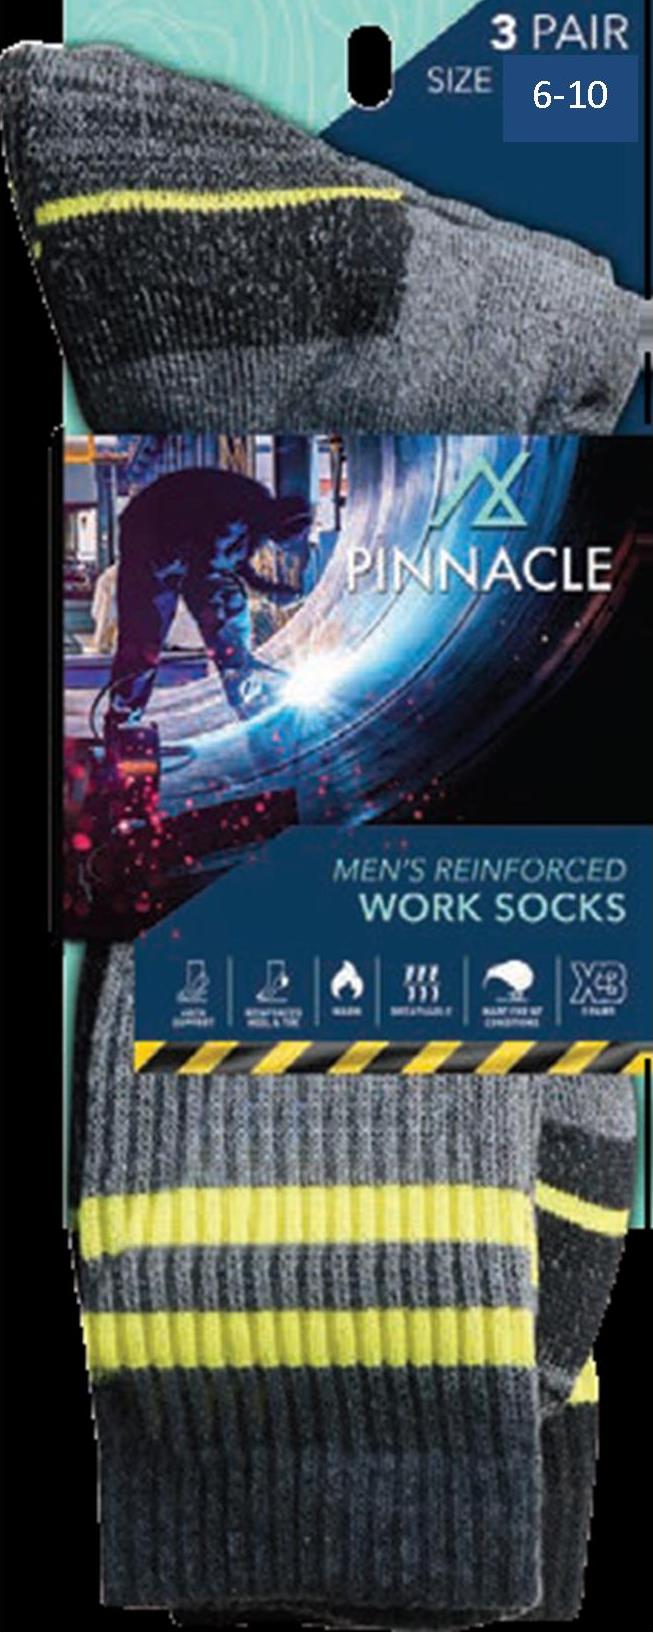 Men's Reinforced Work Socks, Size 6 -10, 3 Pack